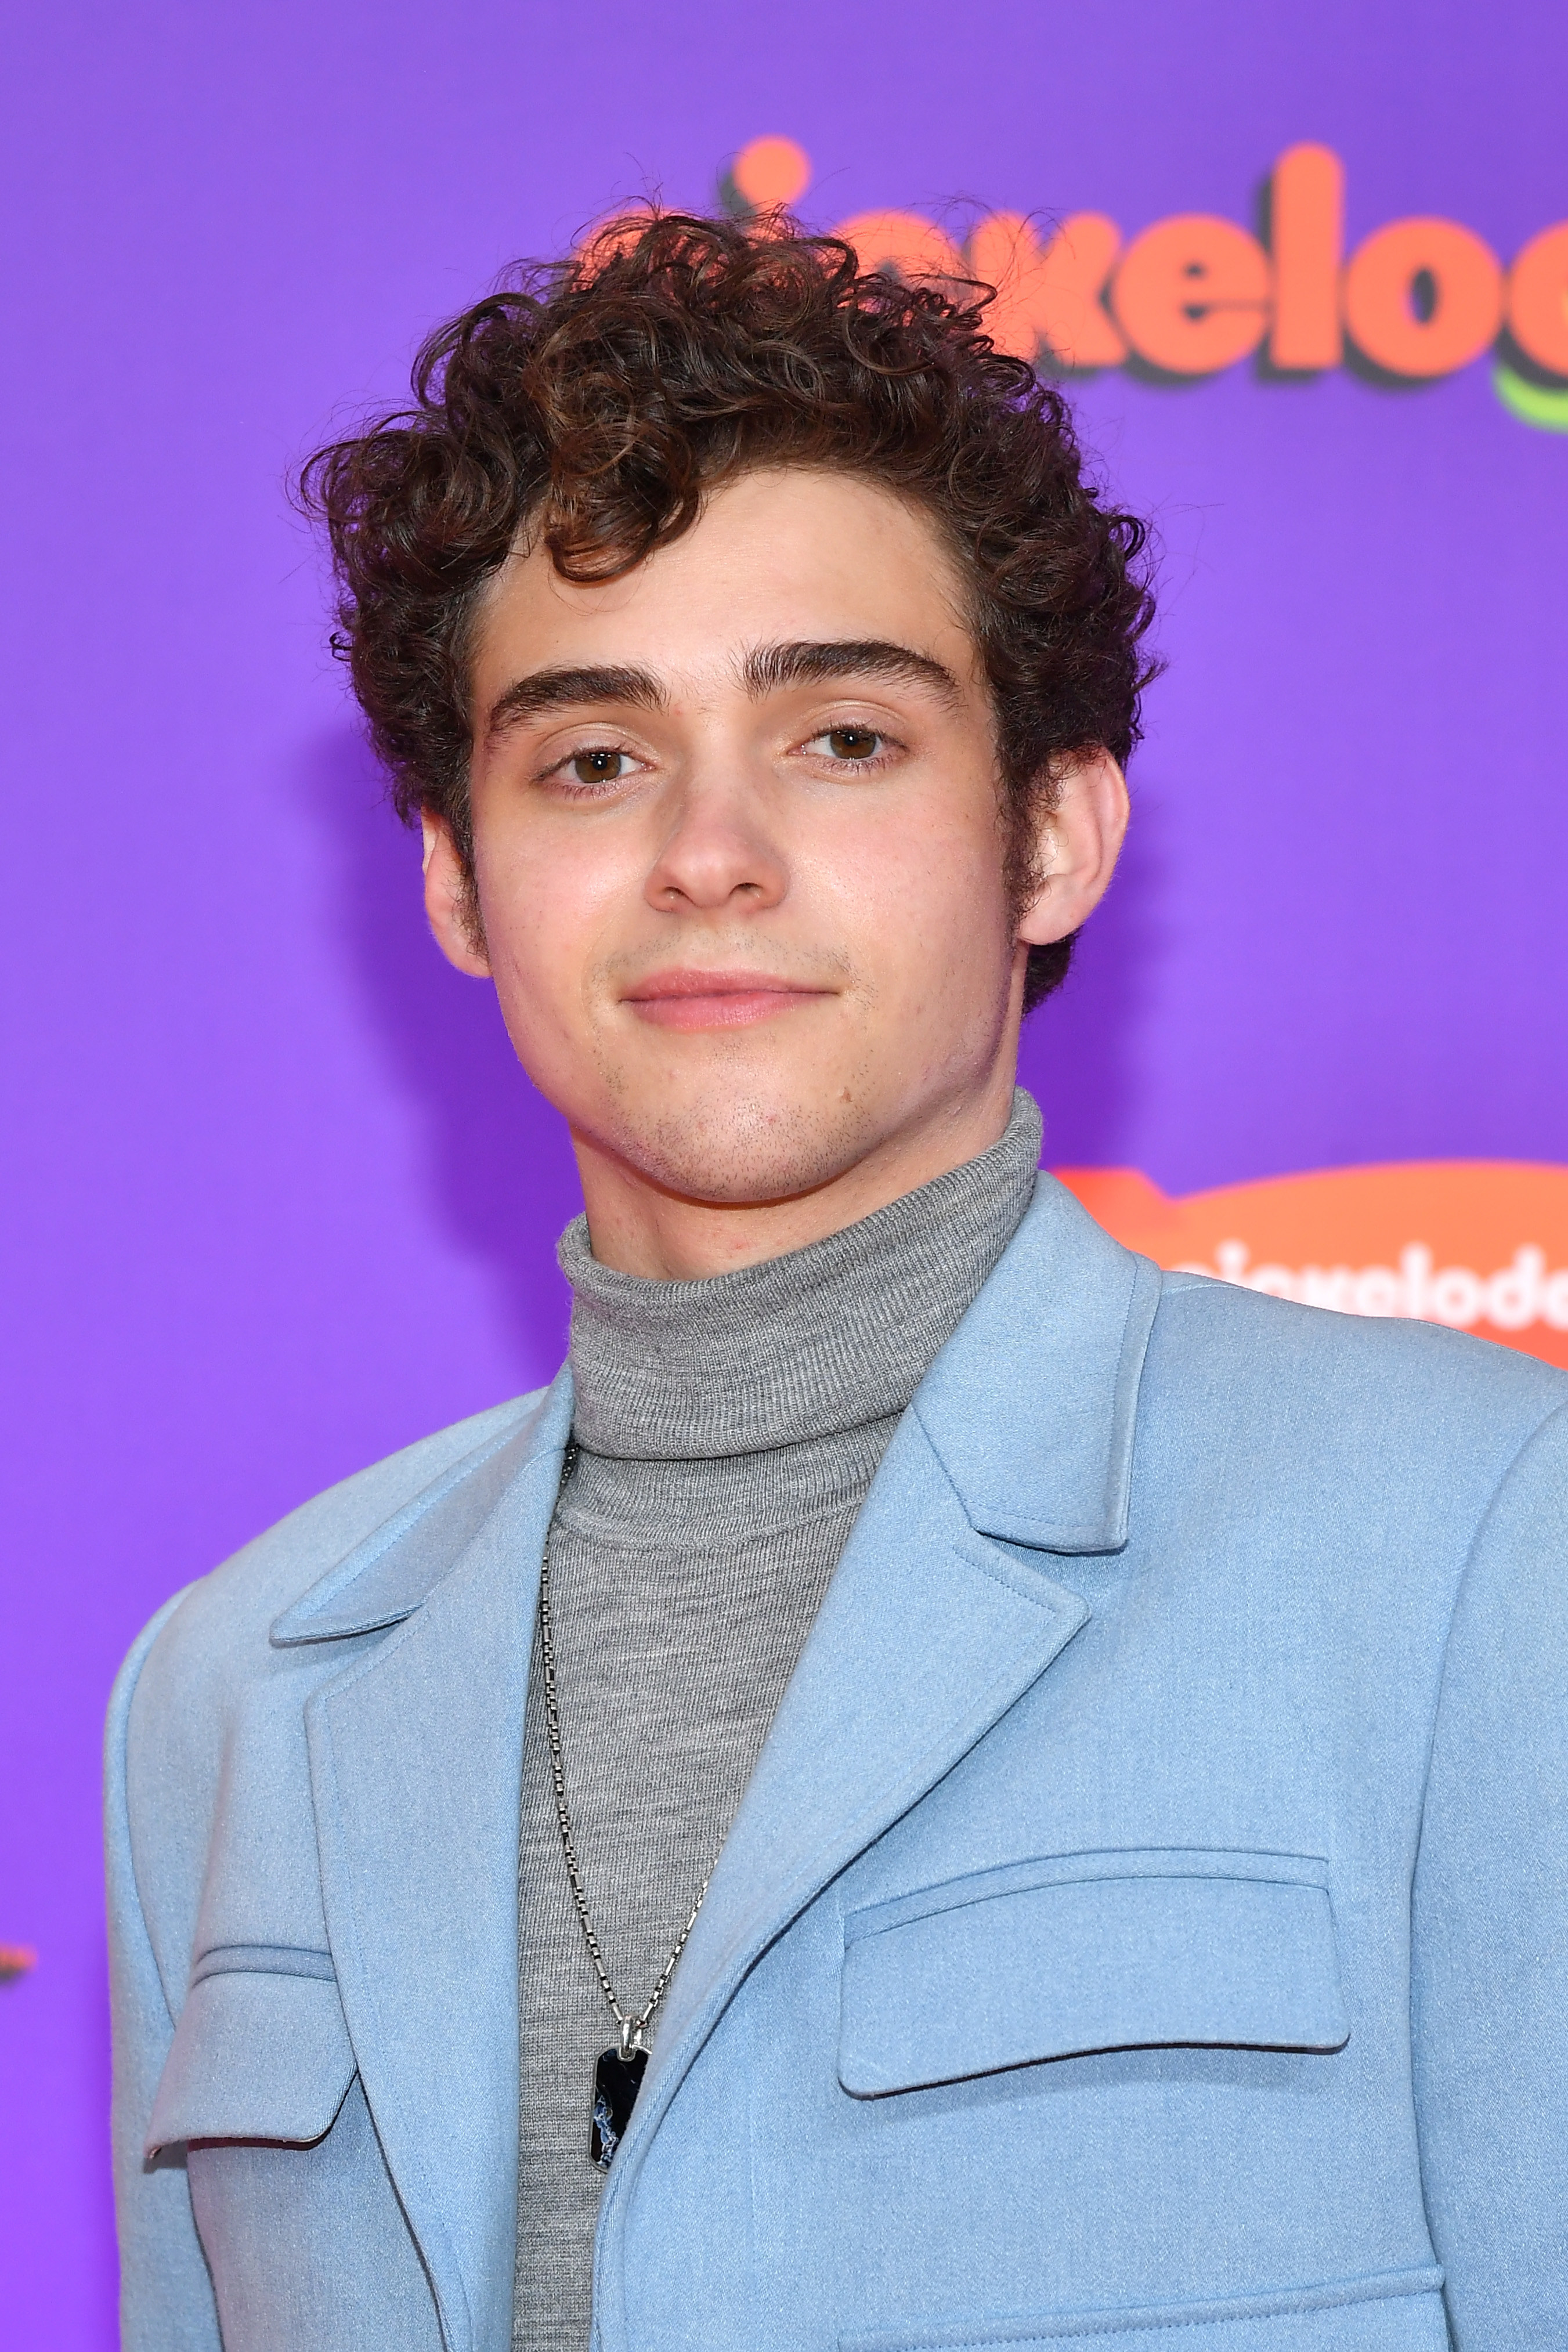 Joshua Basset at the Nickelodeon Awards in 2020